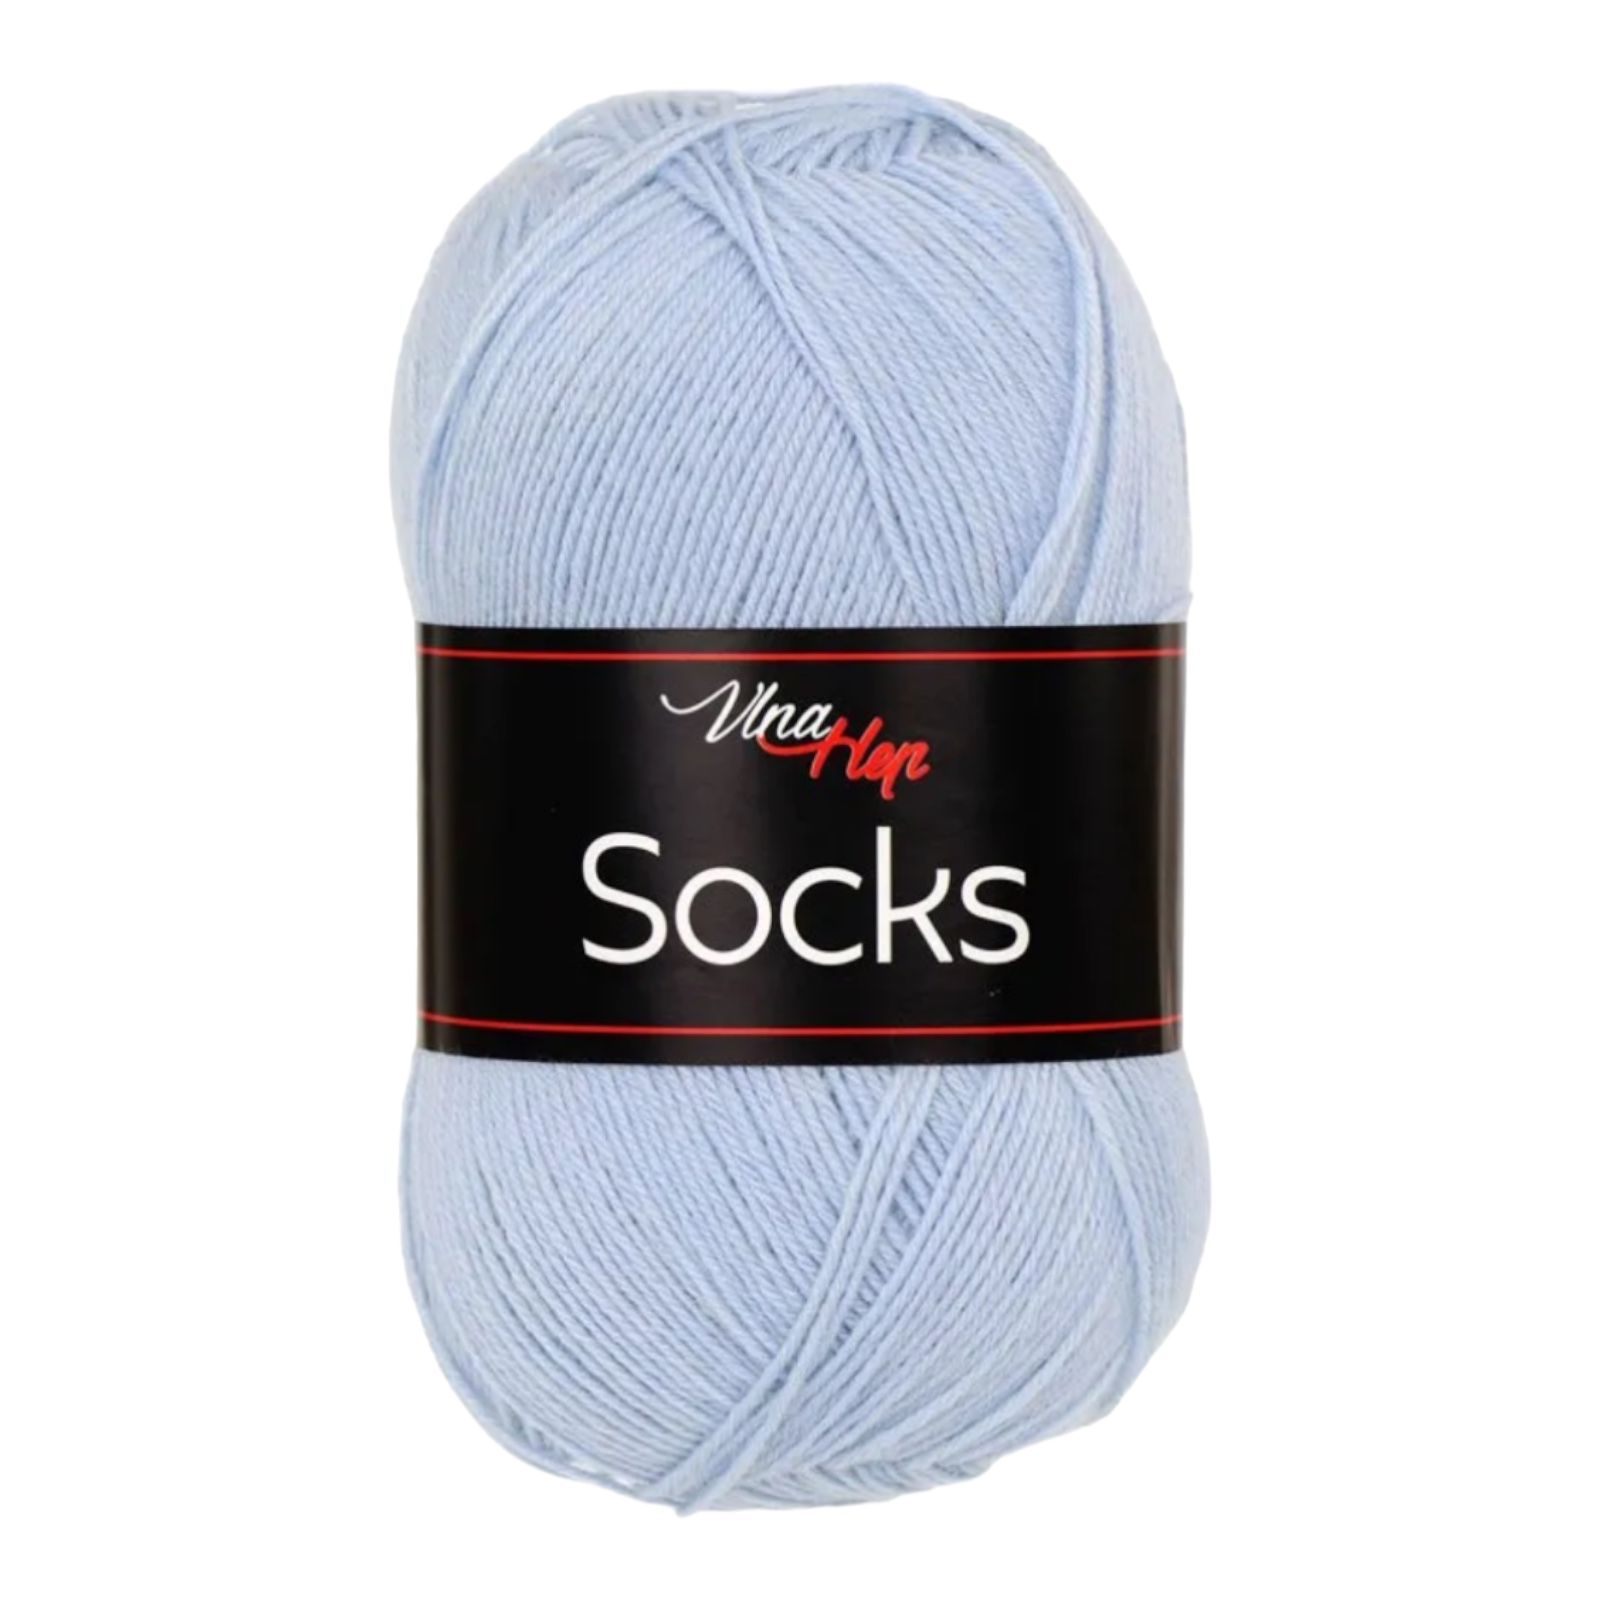 Best Socks 4-fach - Vlna-Hep